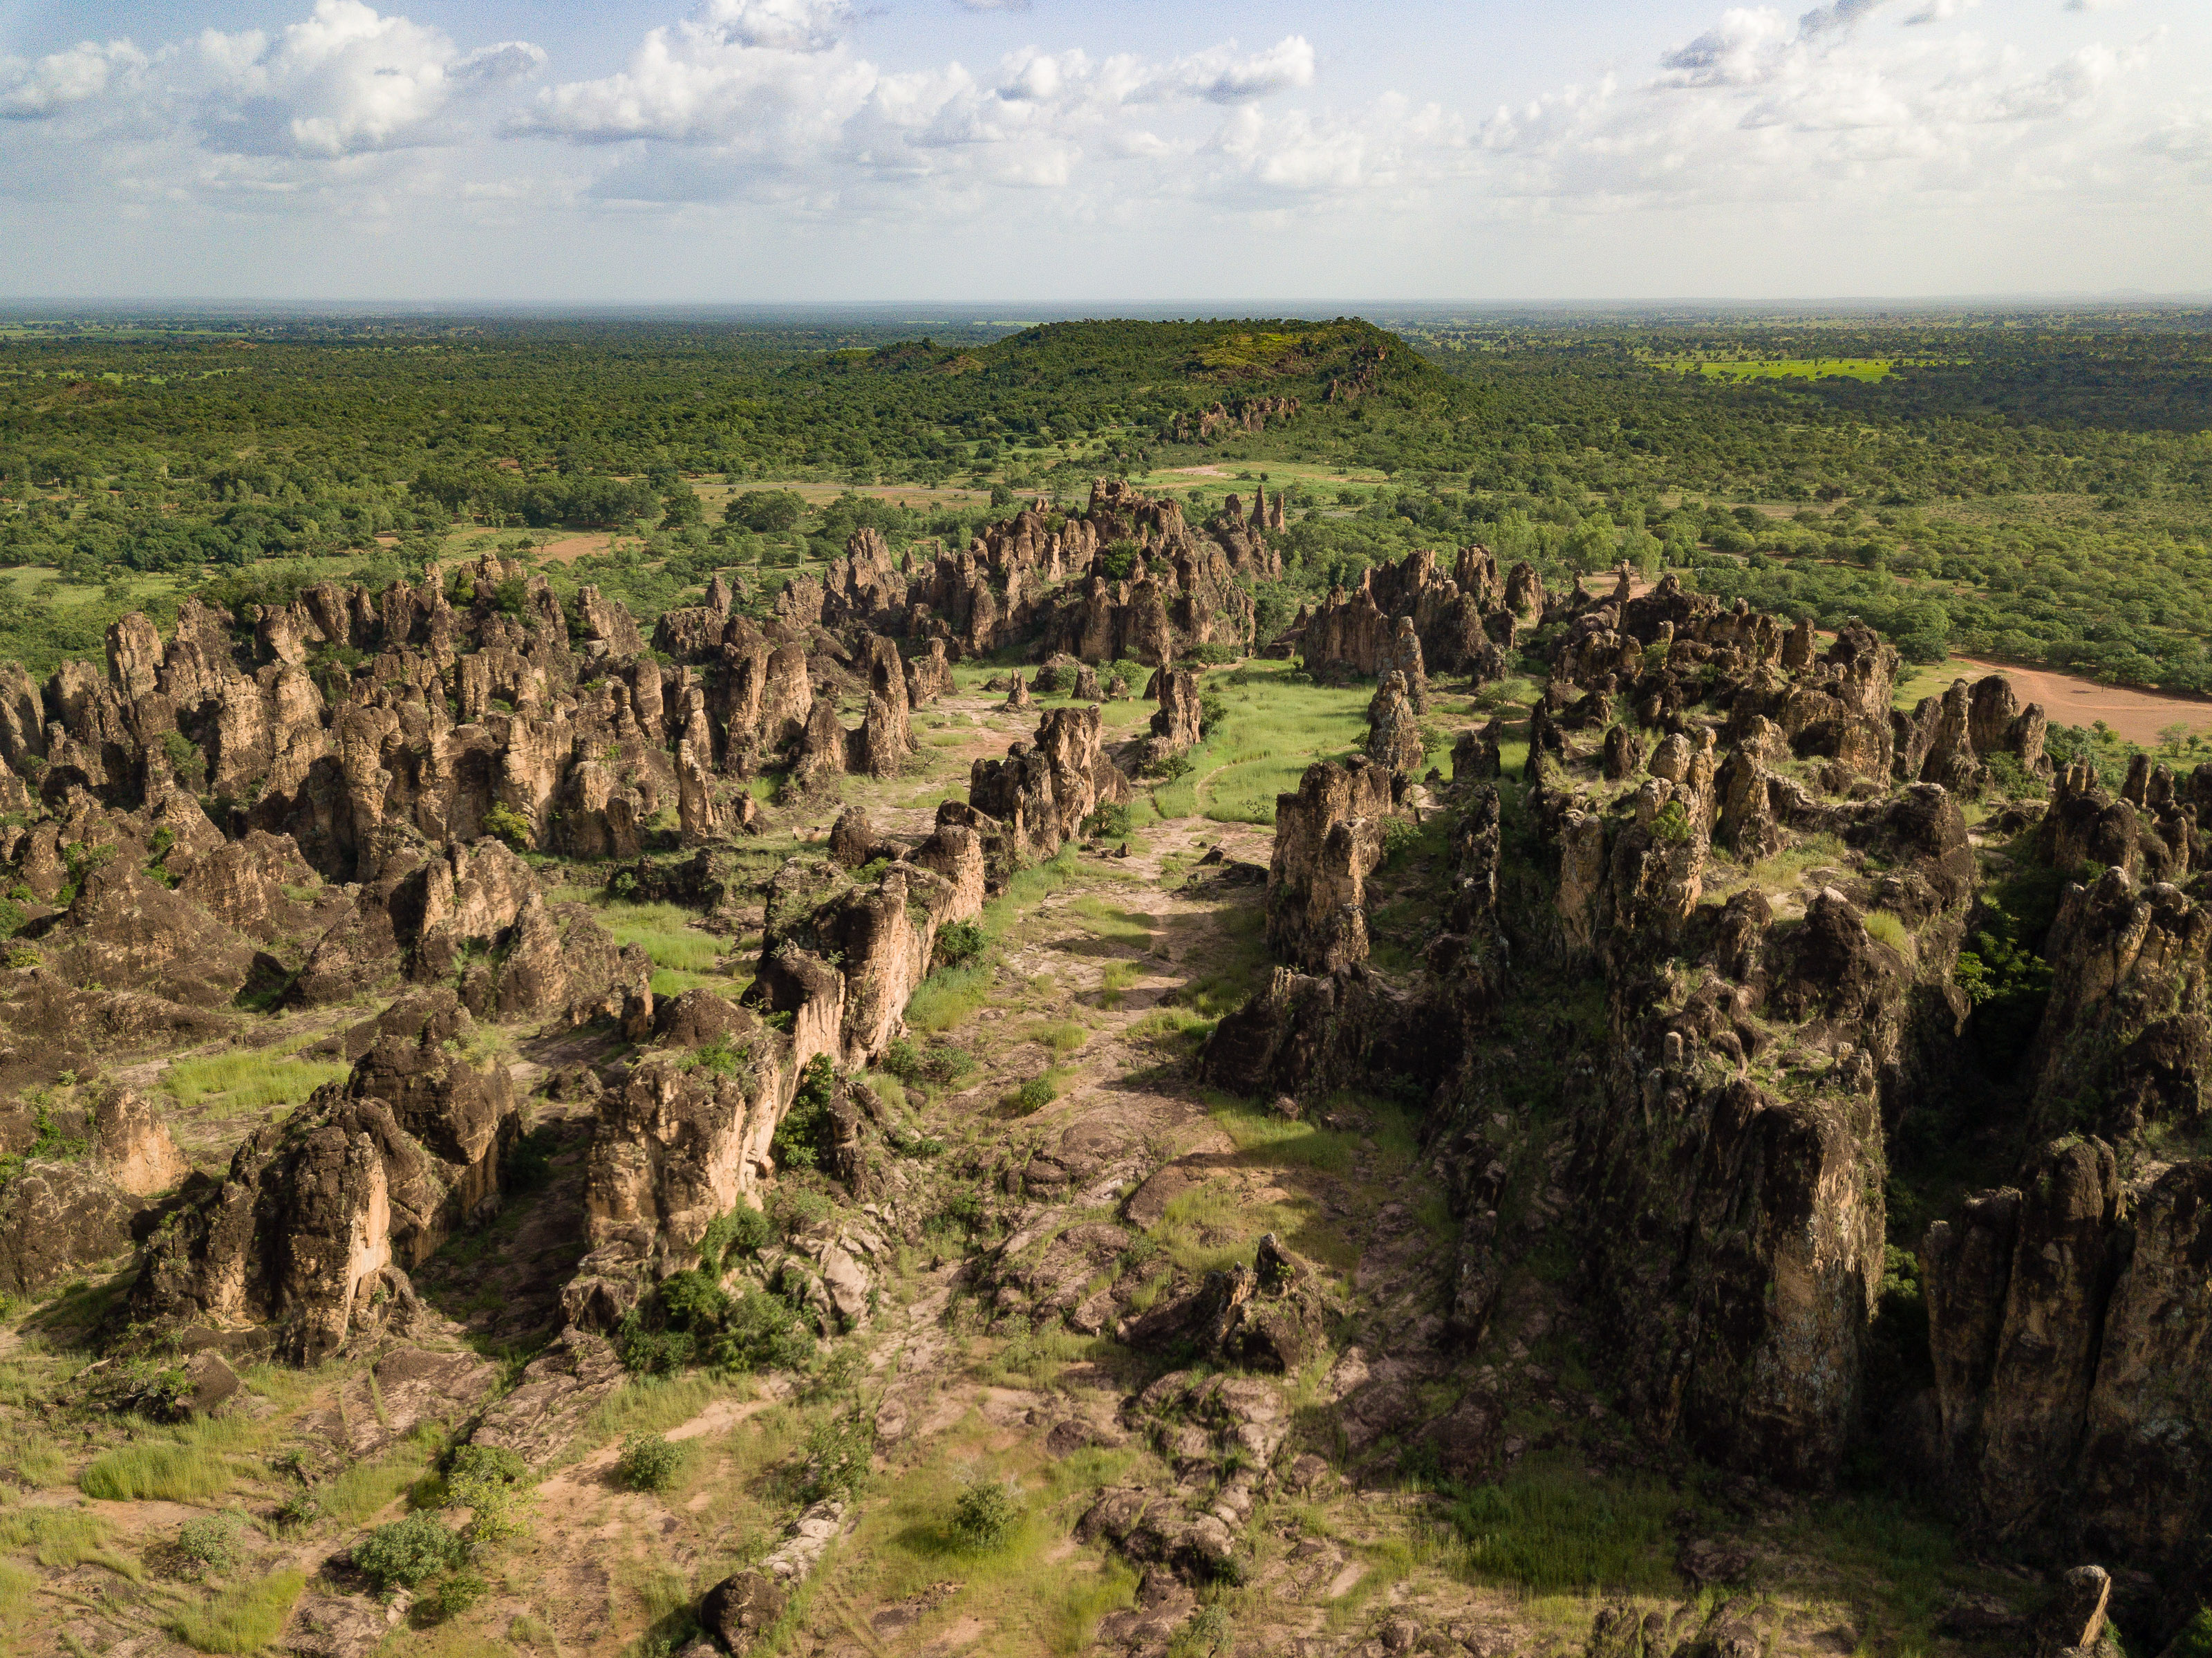 File:Aerial view Pics de Sindou, Burkina Faso.jpg - Wikimedia Commons